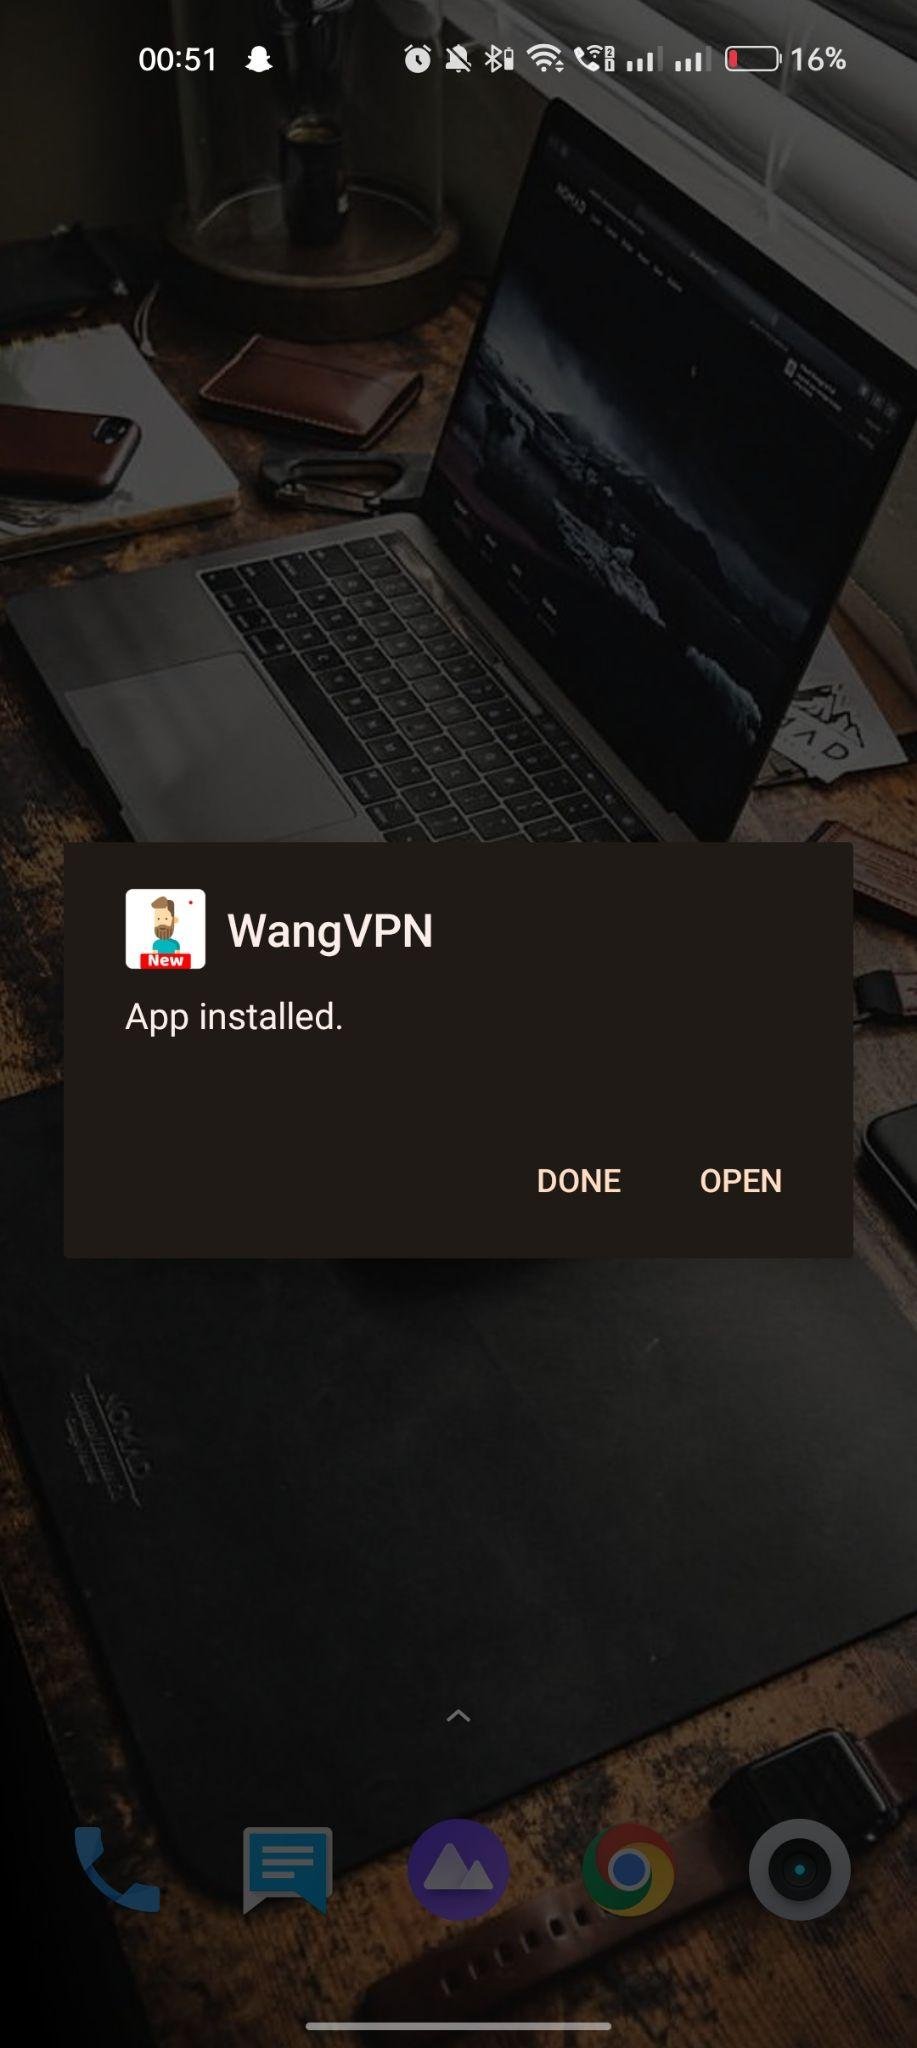 Wang VPN apk installed